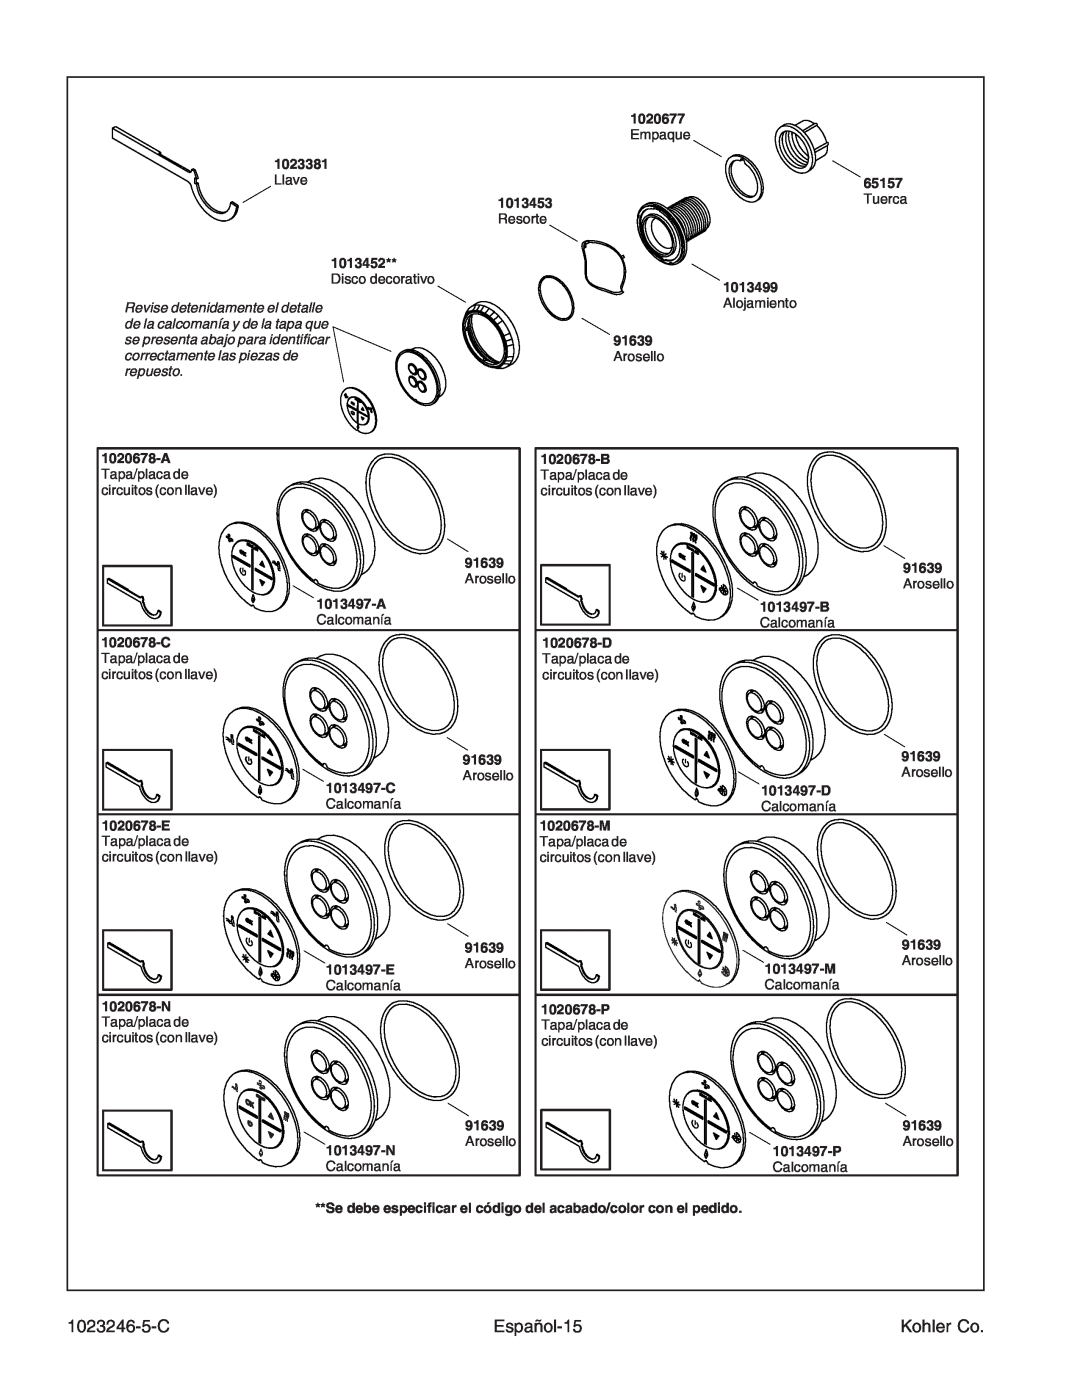 Kohler K-1418-CT manual A Tapa/placa de circuitos con llave 